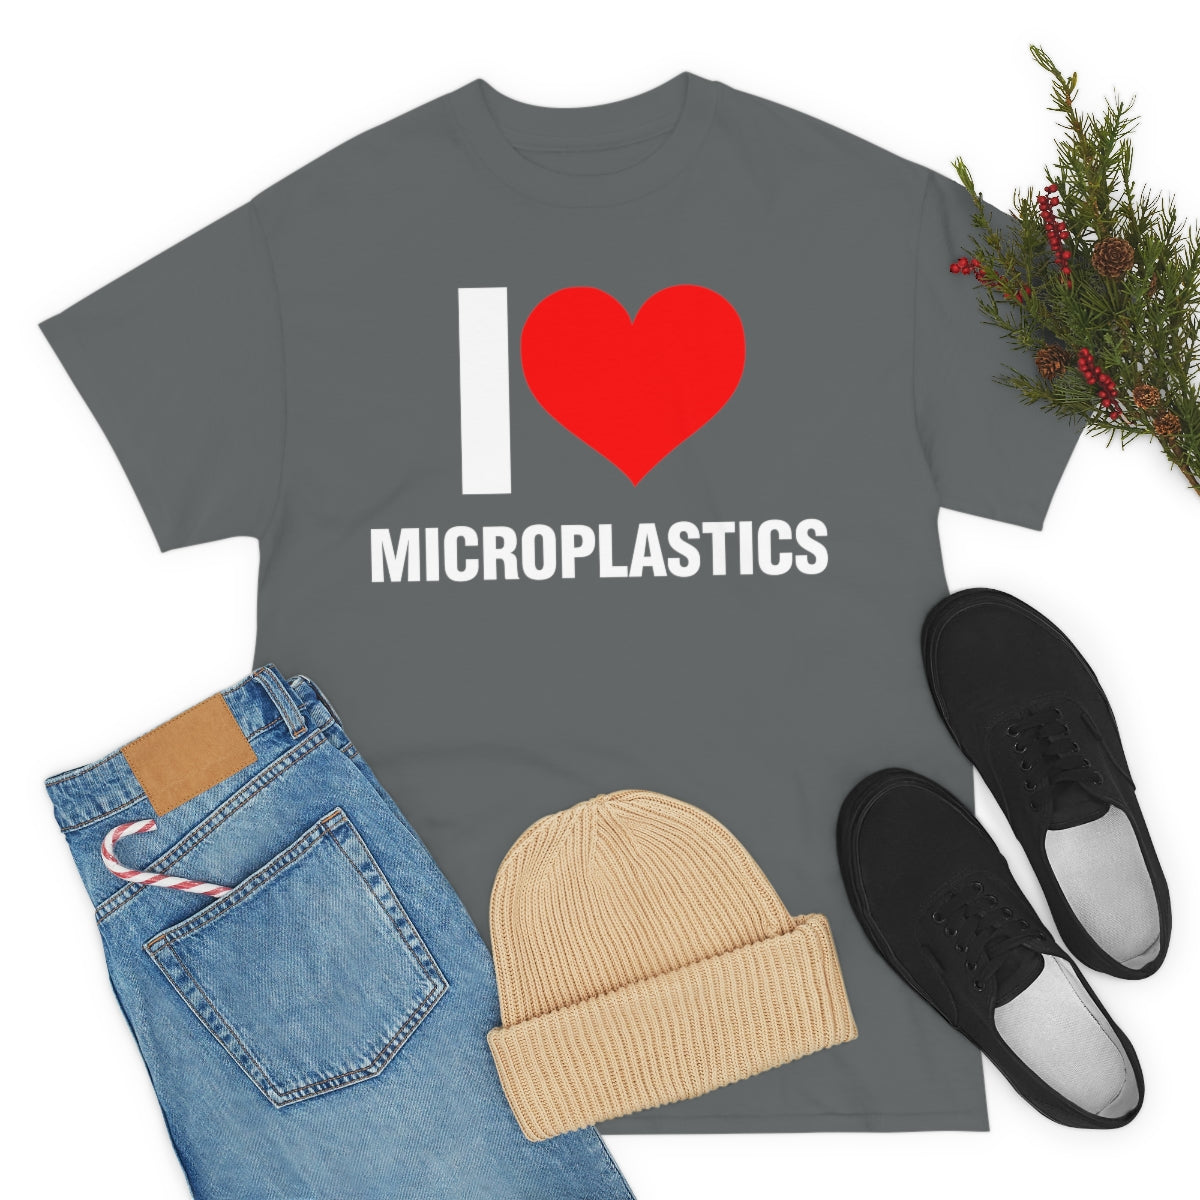 I LOVE MICROPLASTICS TEE